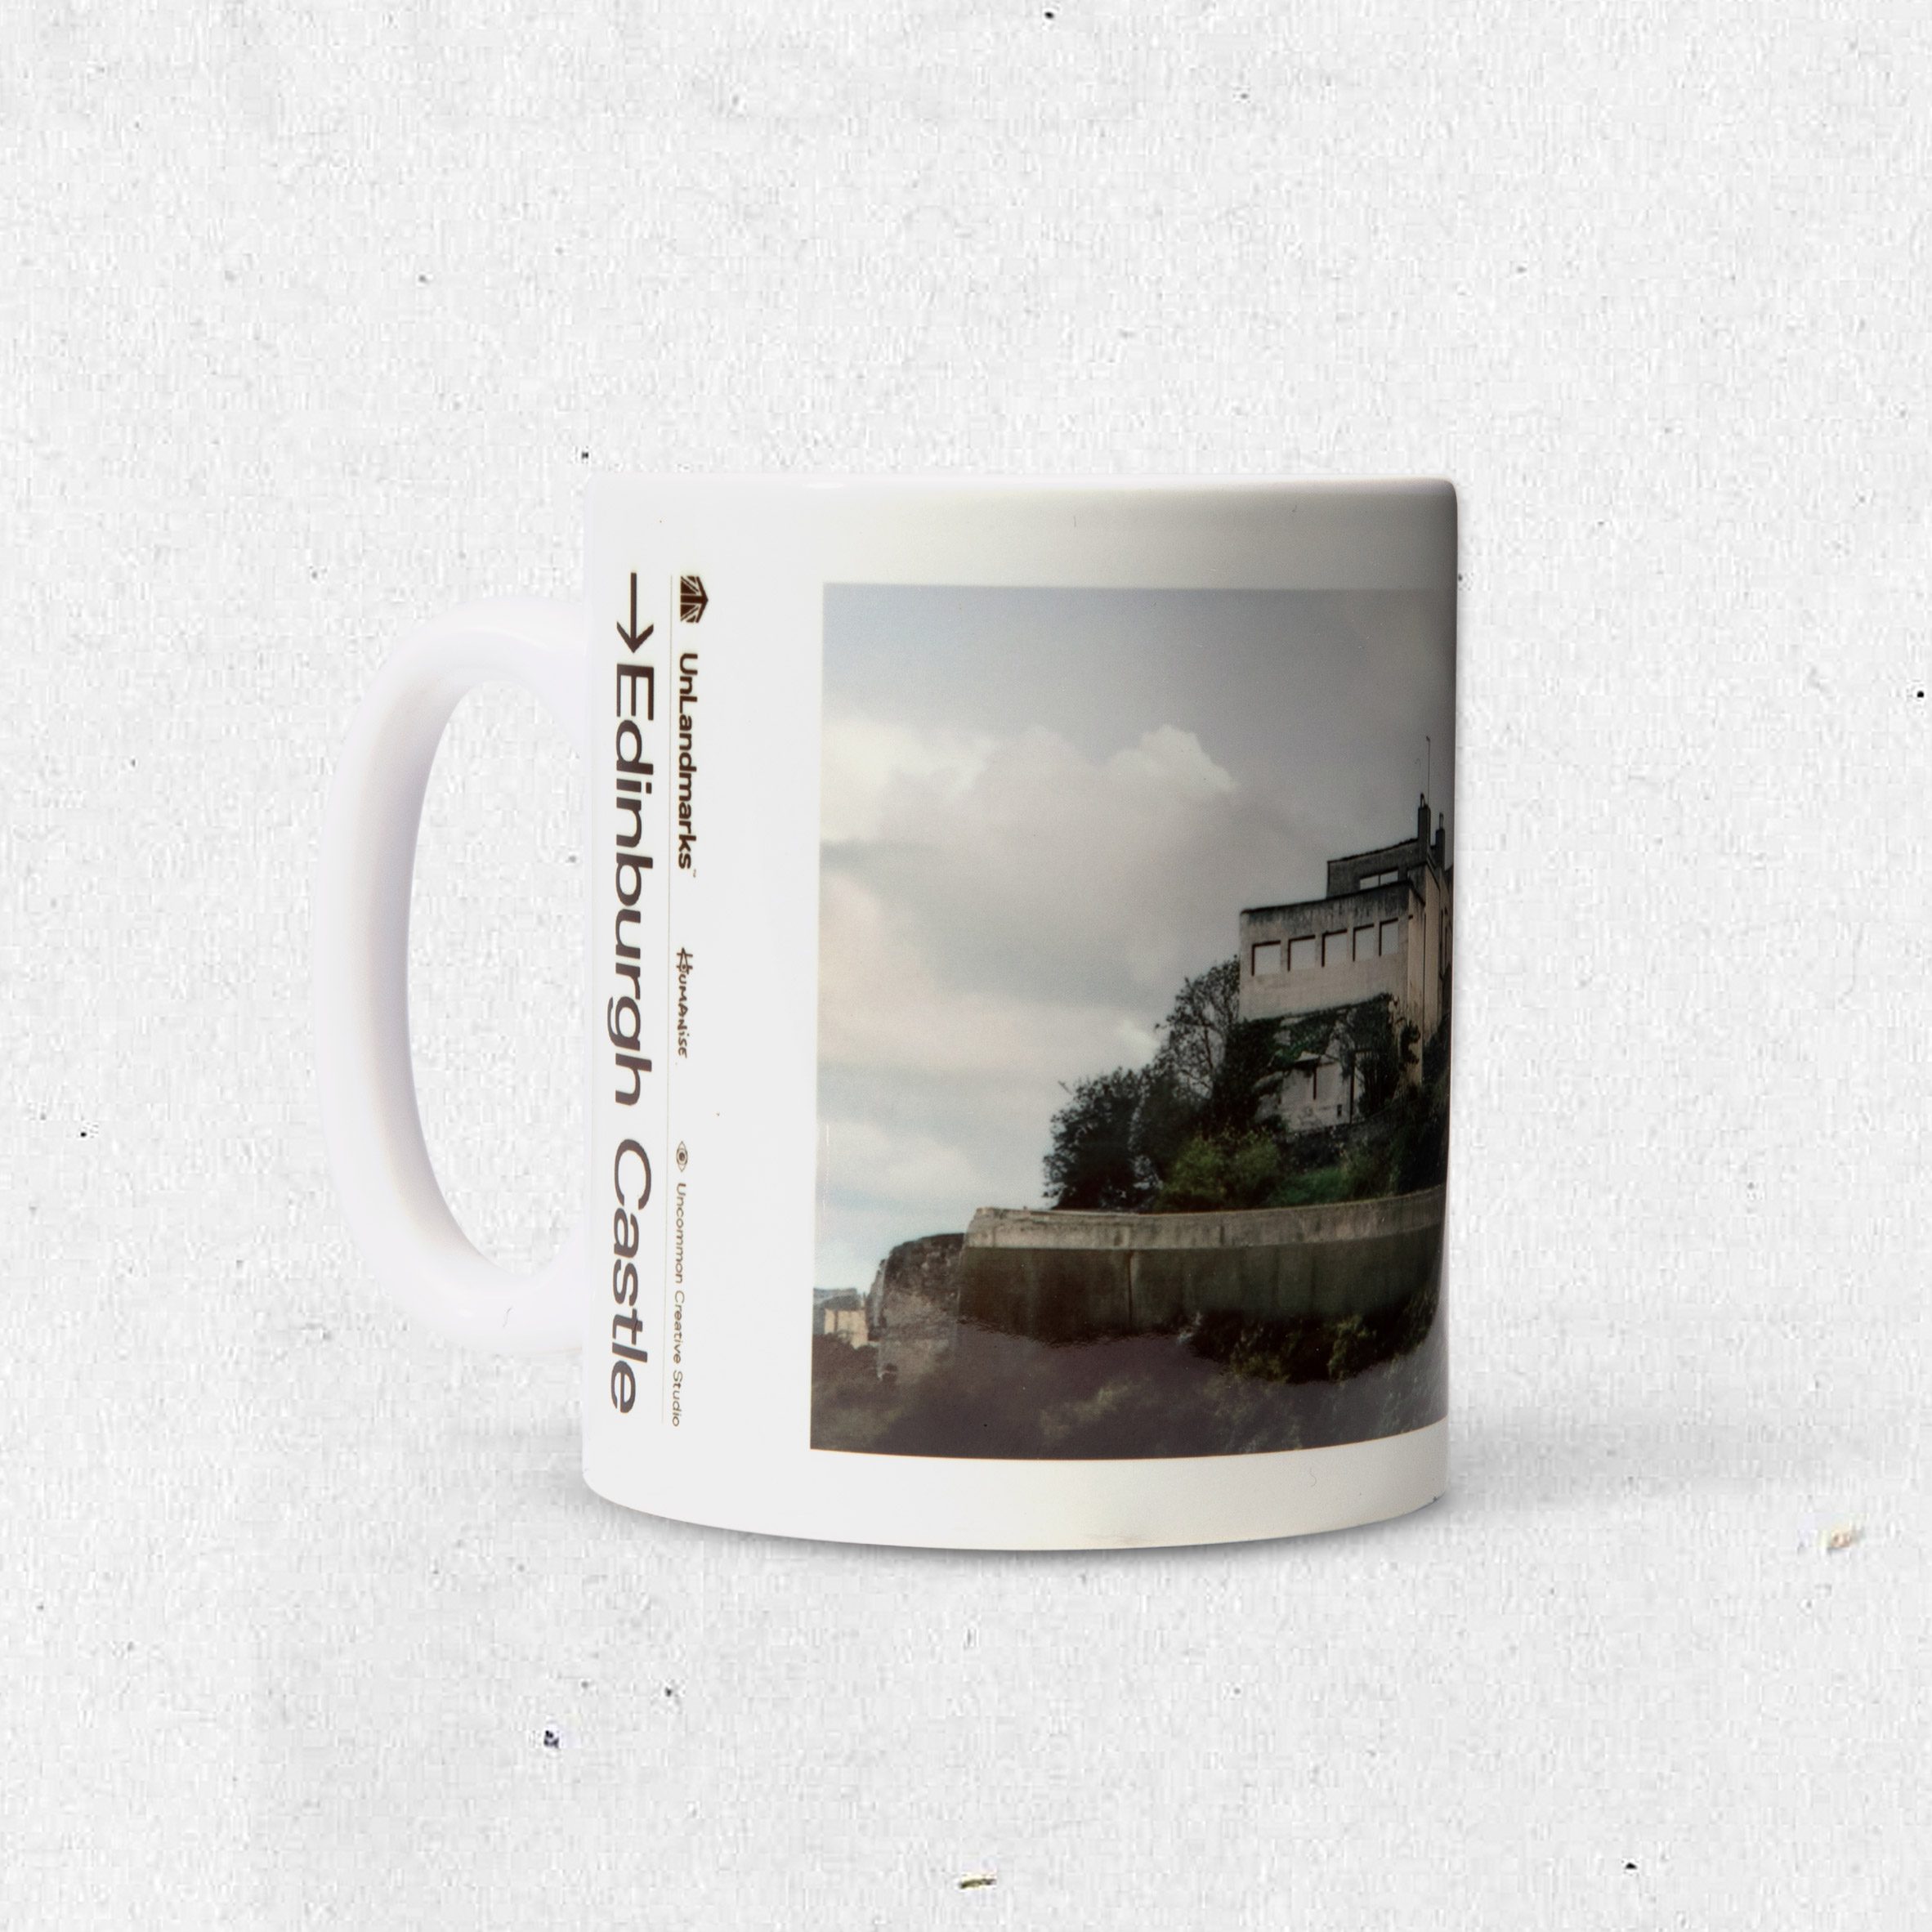 Souvenir mug of boring Edinburgh Castle